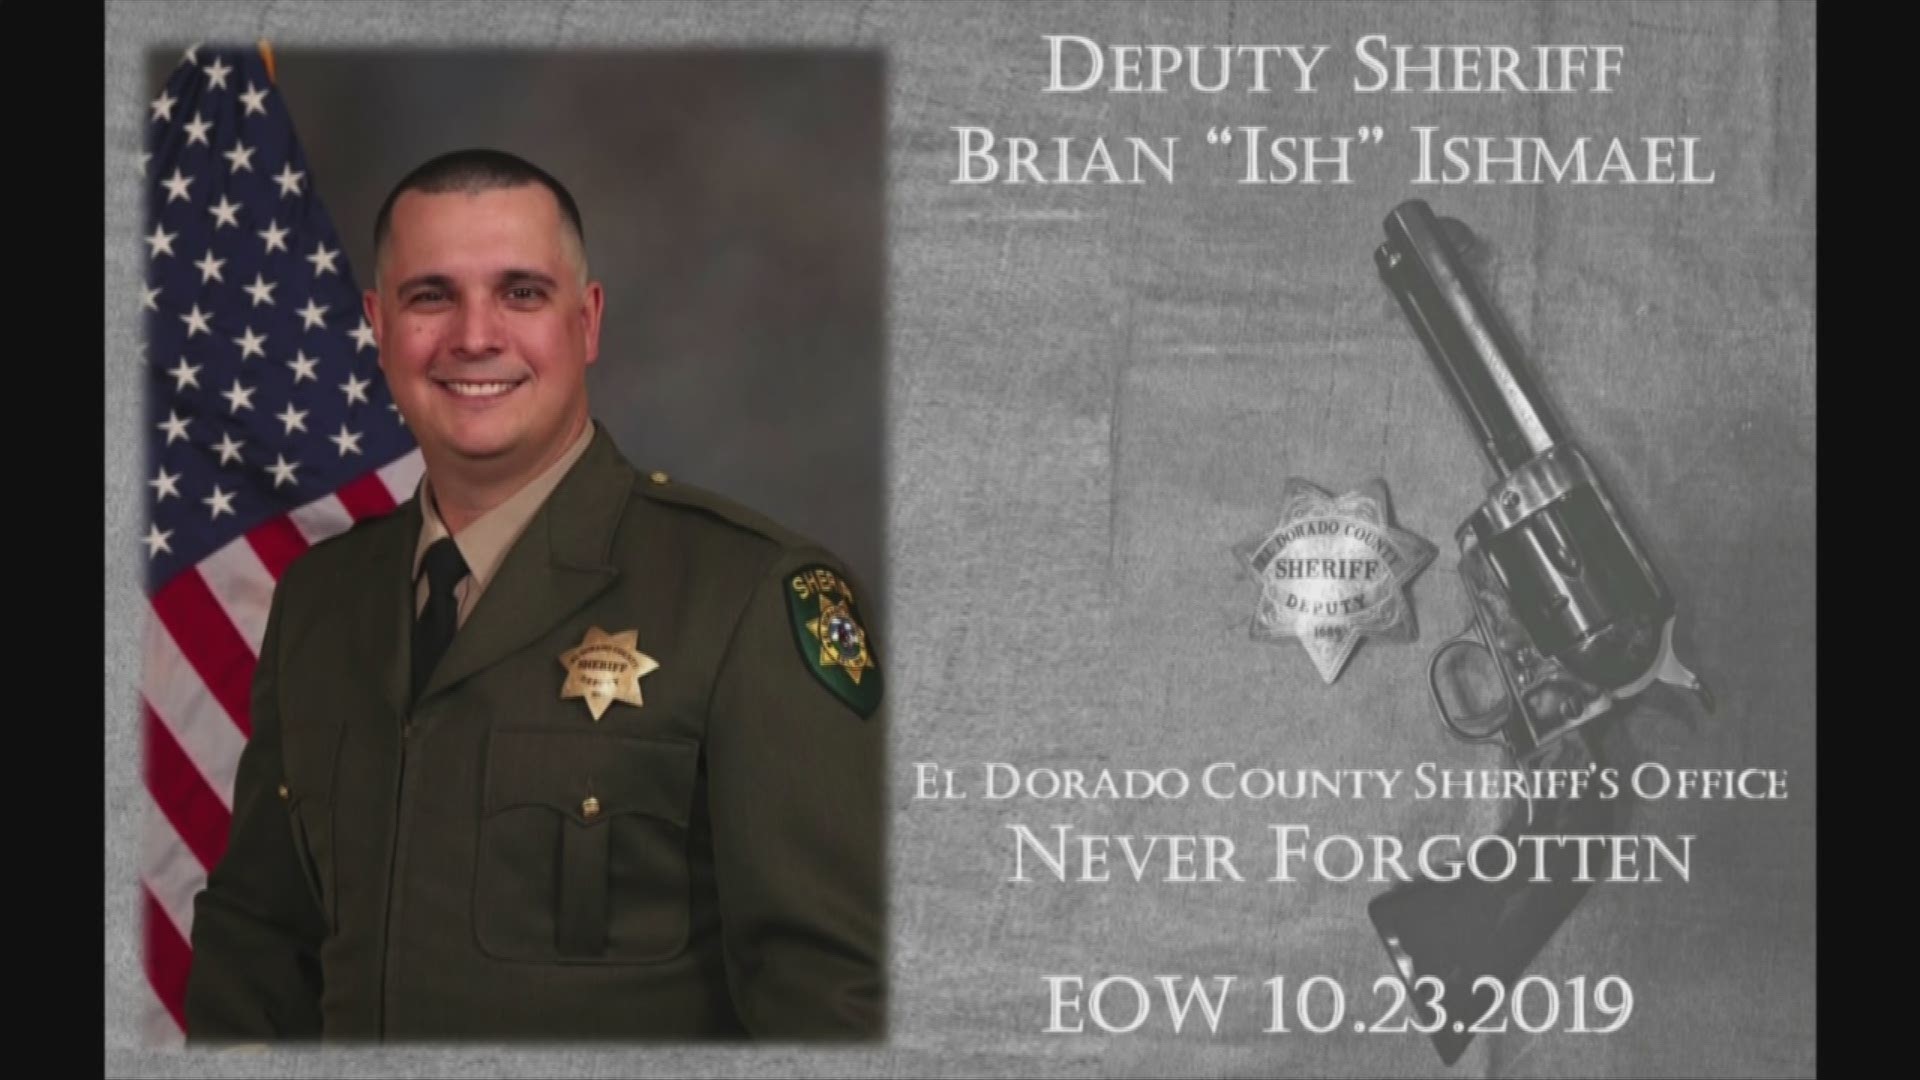 End of Watch call for fallen El Dorado County Sheriff's Deputy Brian Ishmael plays at his memorial service.